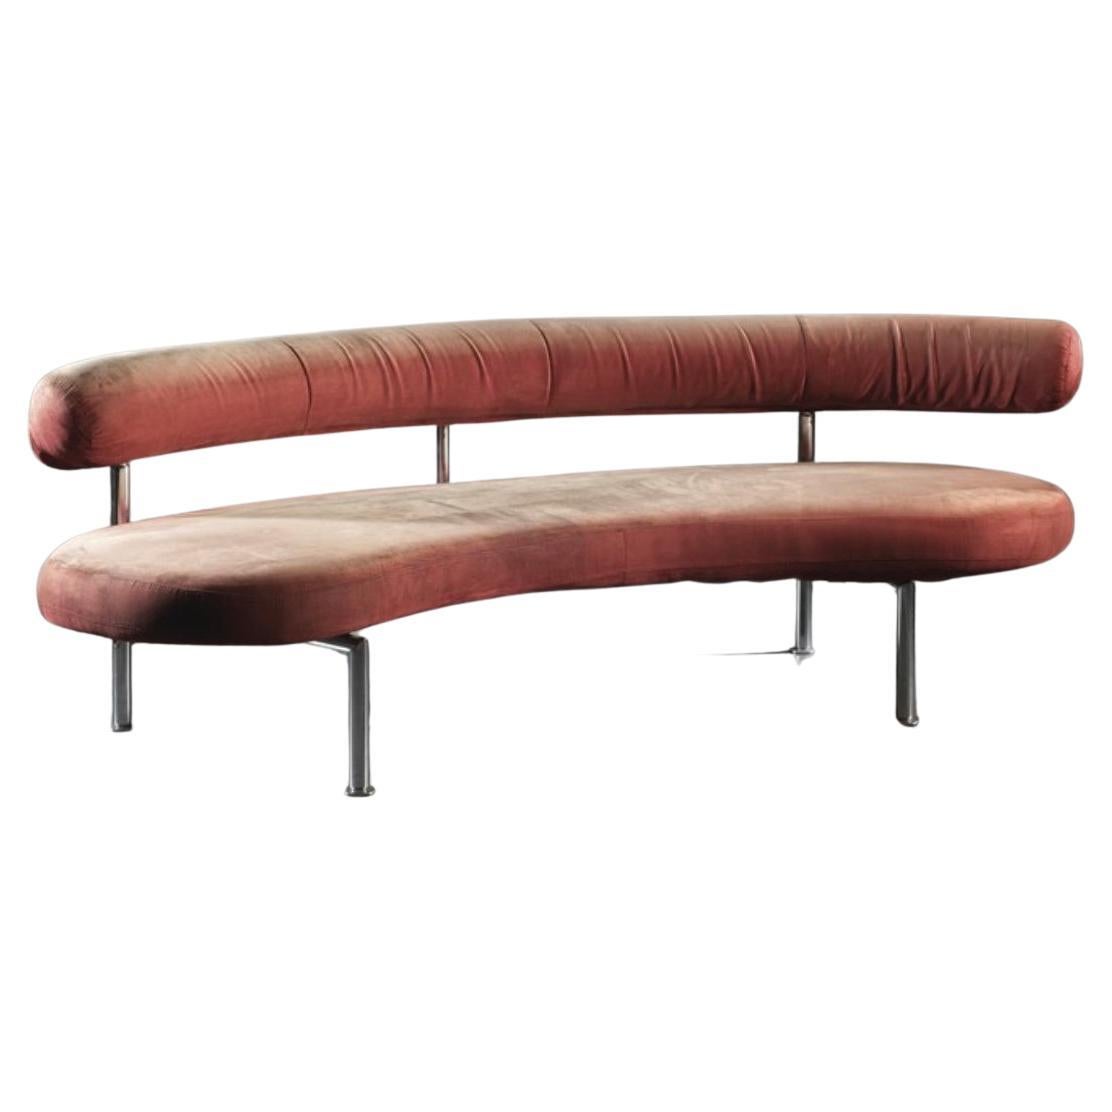 Curved sofa "Max" by Antonio Citterio, Flexform, Italy, 1983 (Customizable)